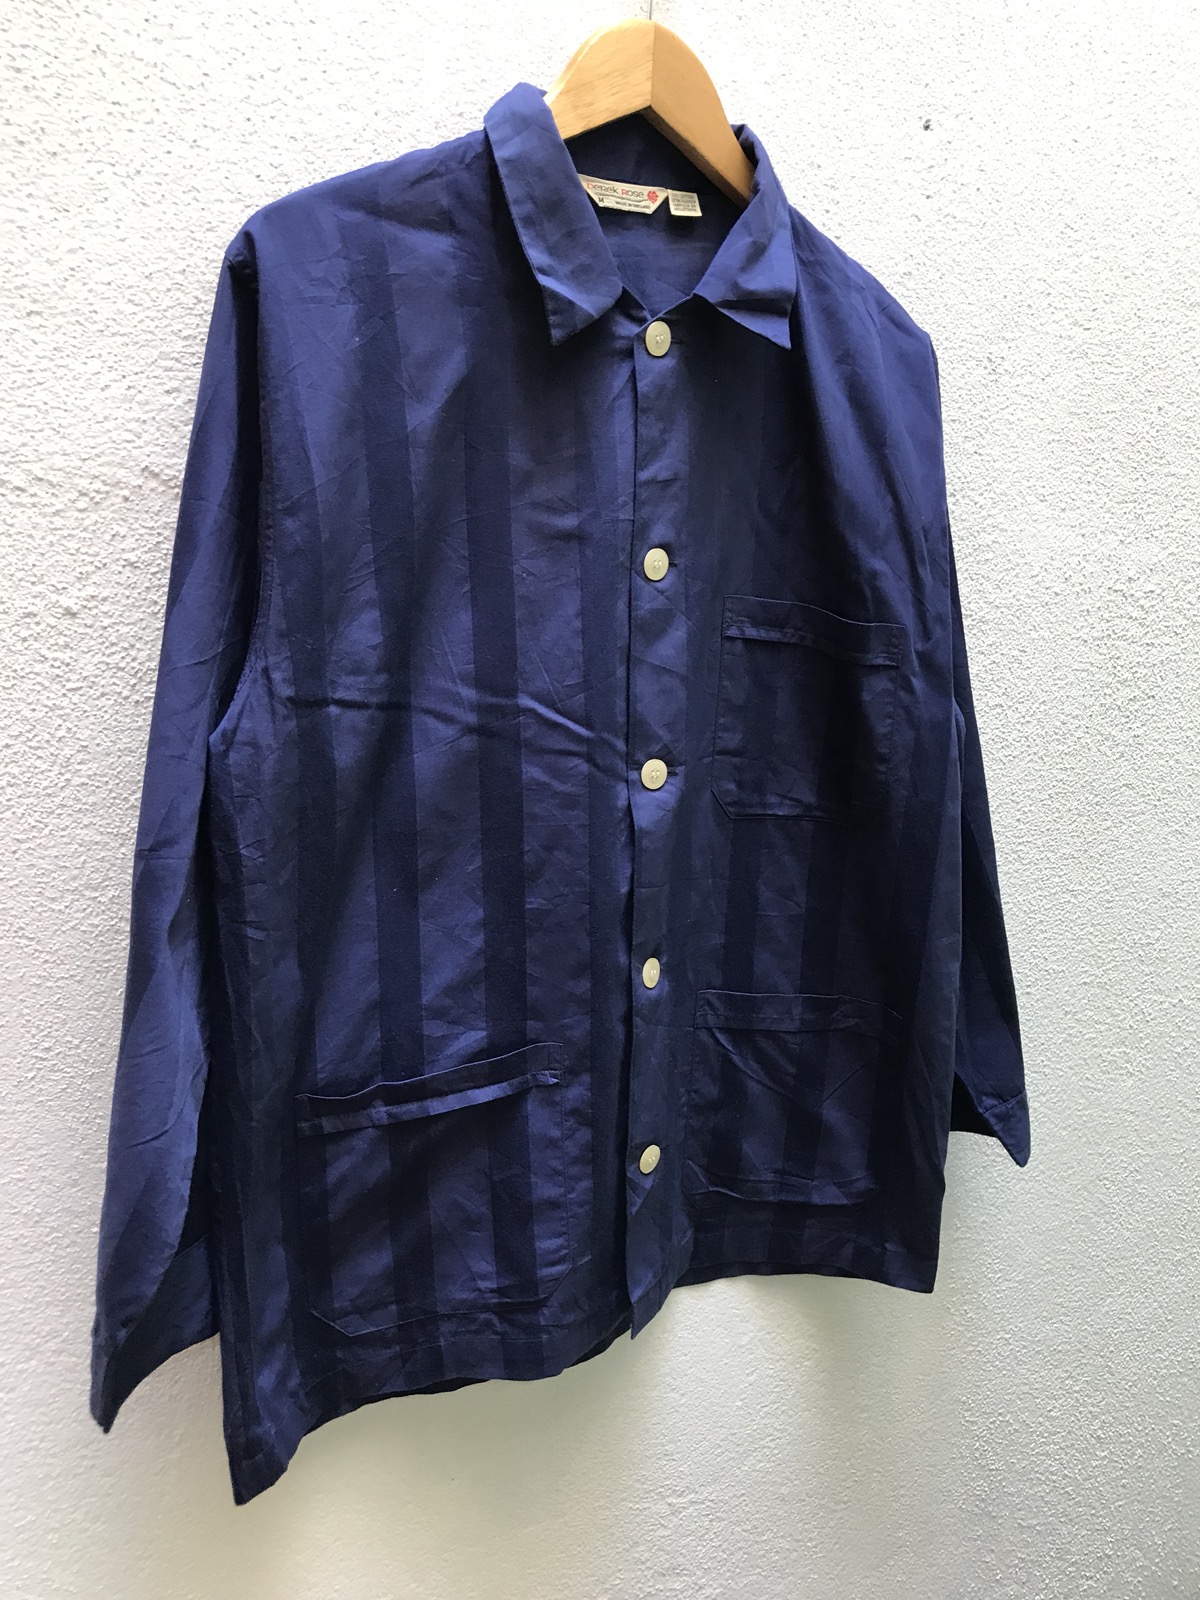 🔥💢 Derek Rose Navy Blue Shirt Made In England - 3